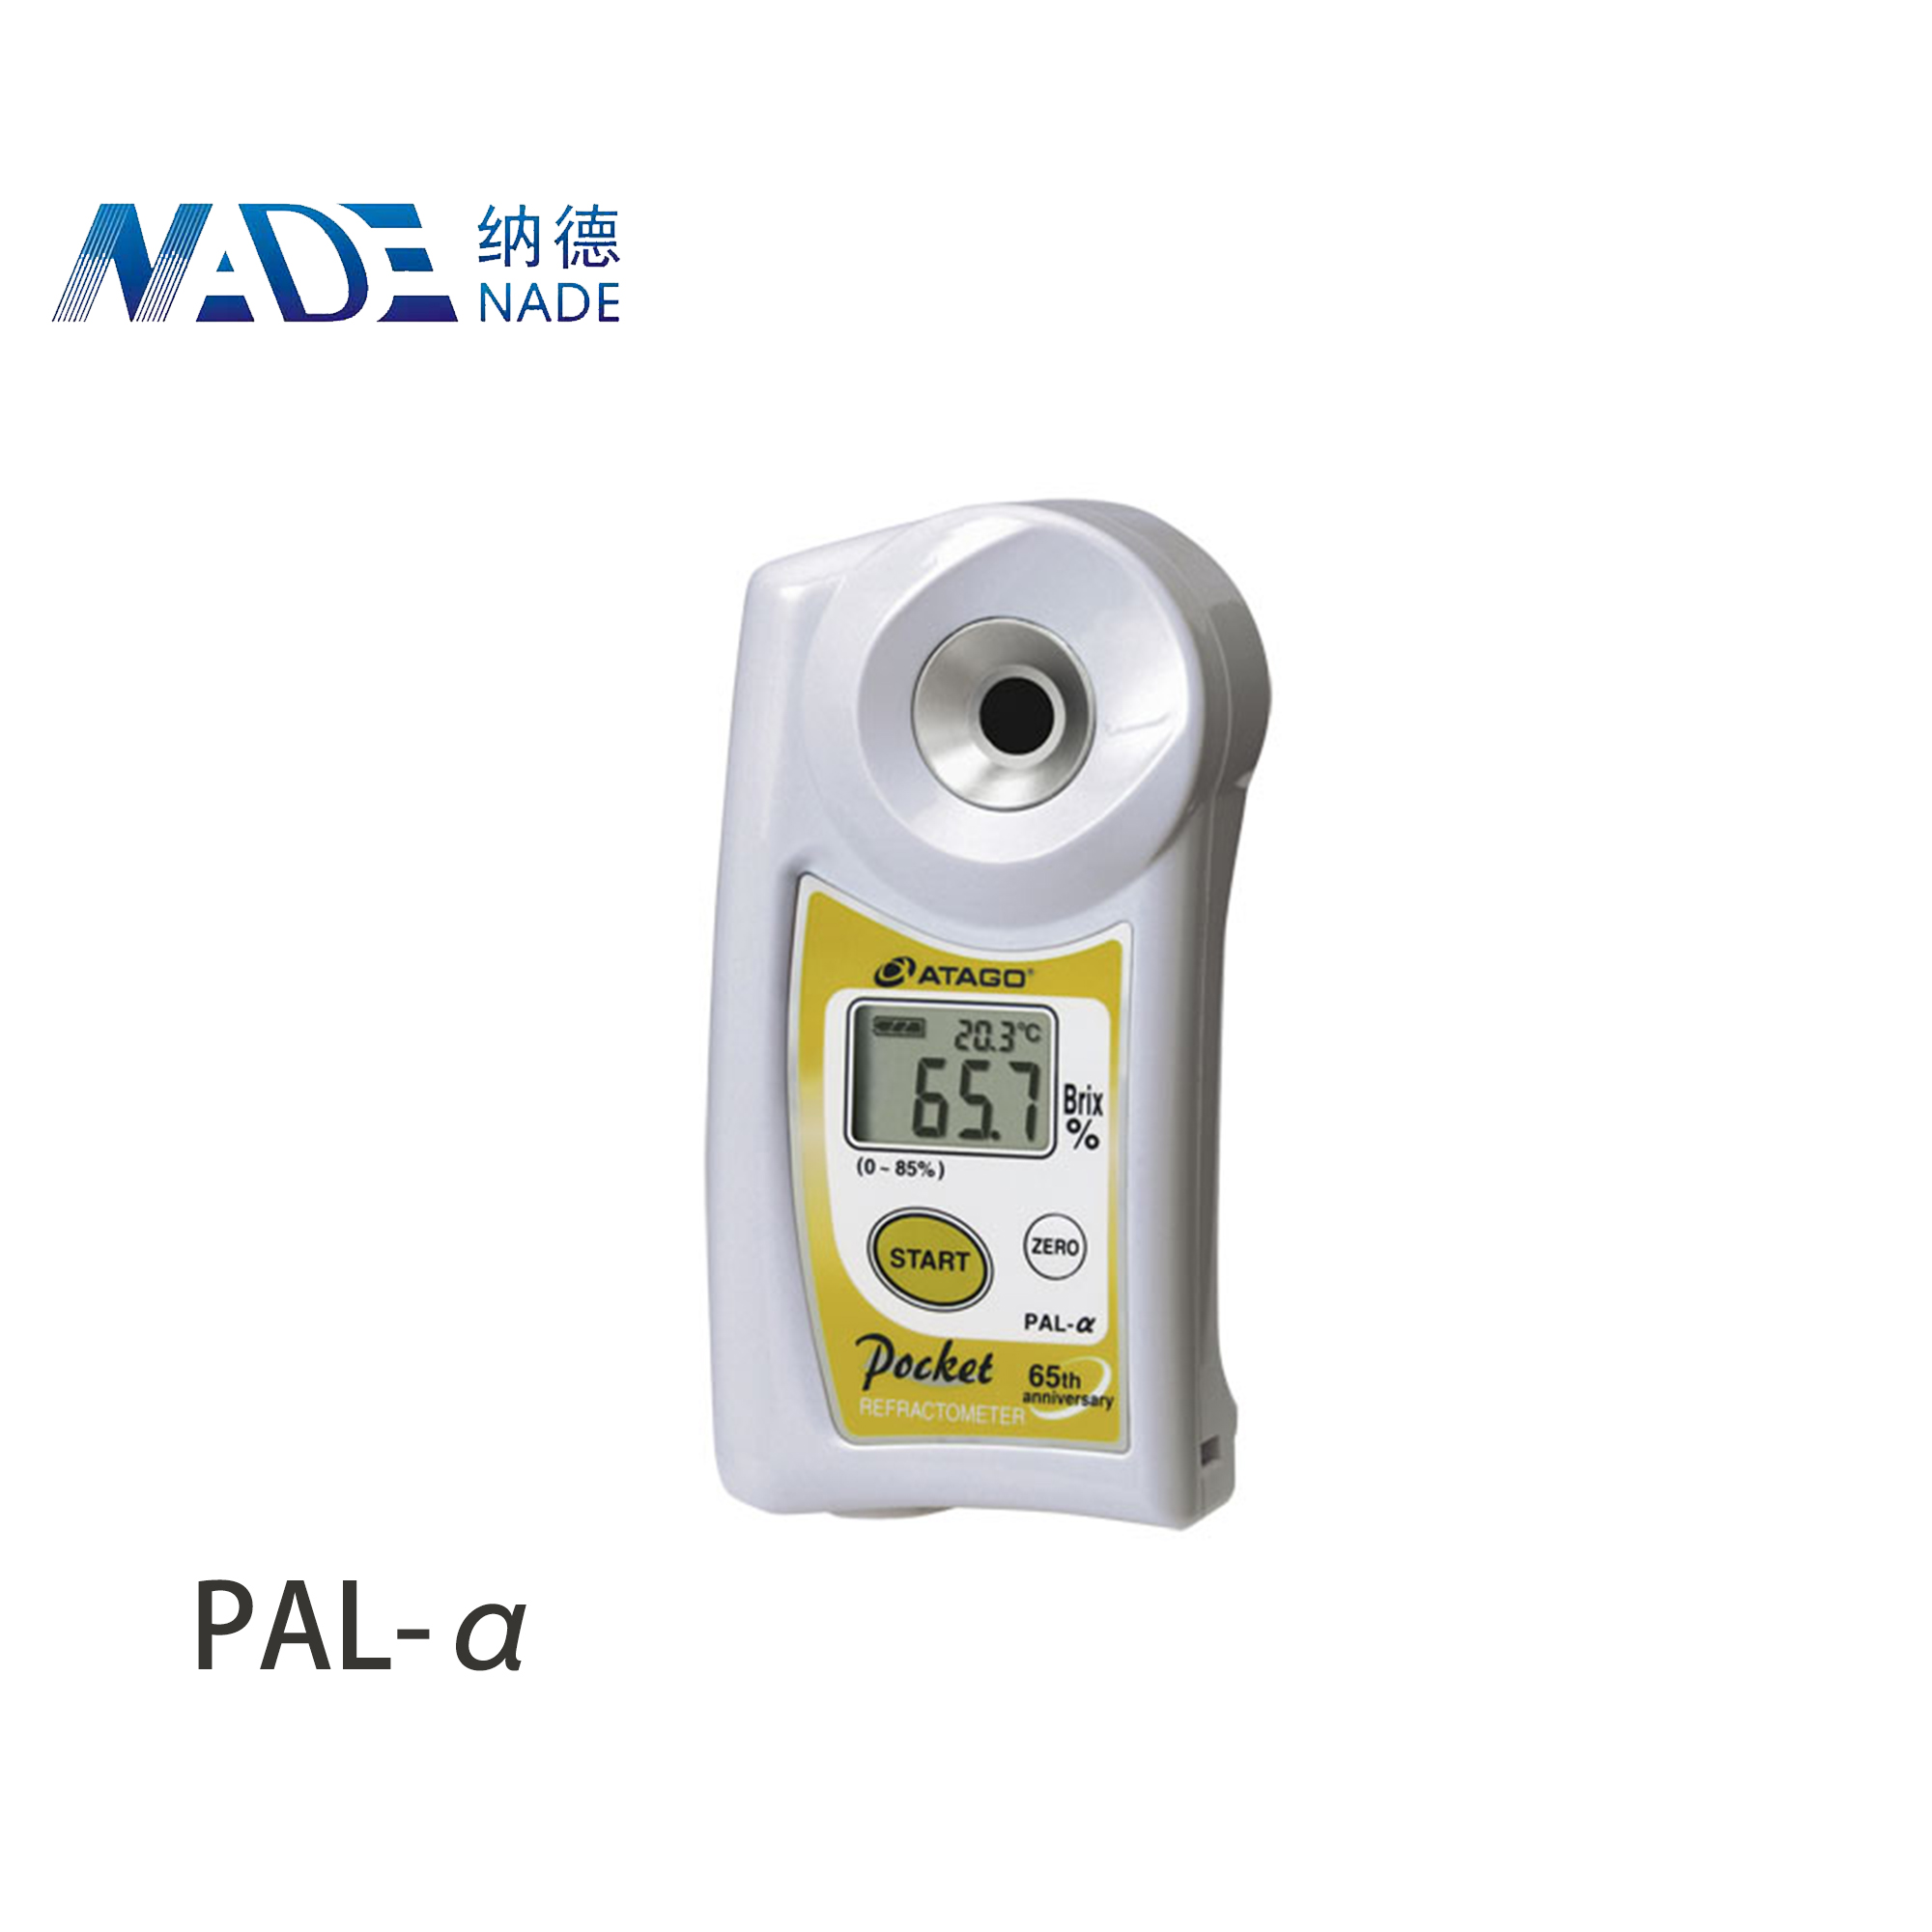 PAL-RI Digital Atago refractometer (polarimeter) hand held "Pocket" auto refractometer Refractive Index 0.03%